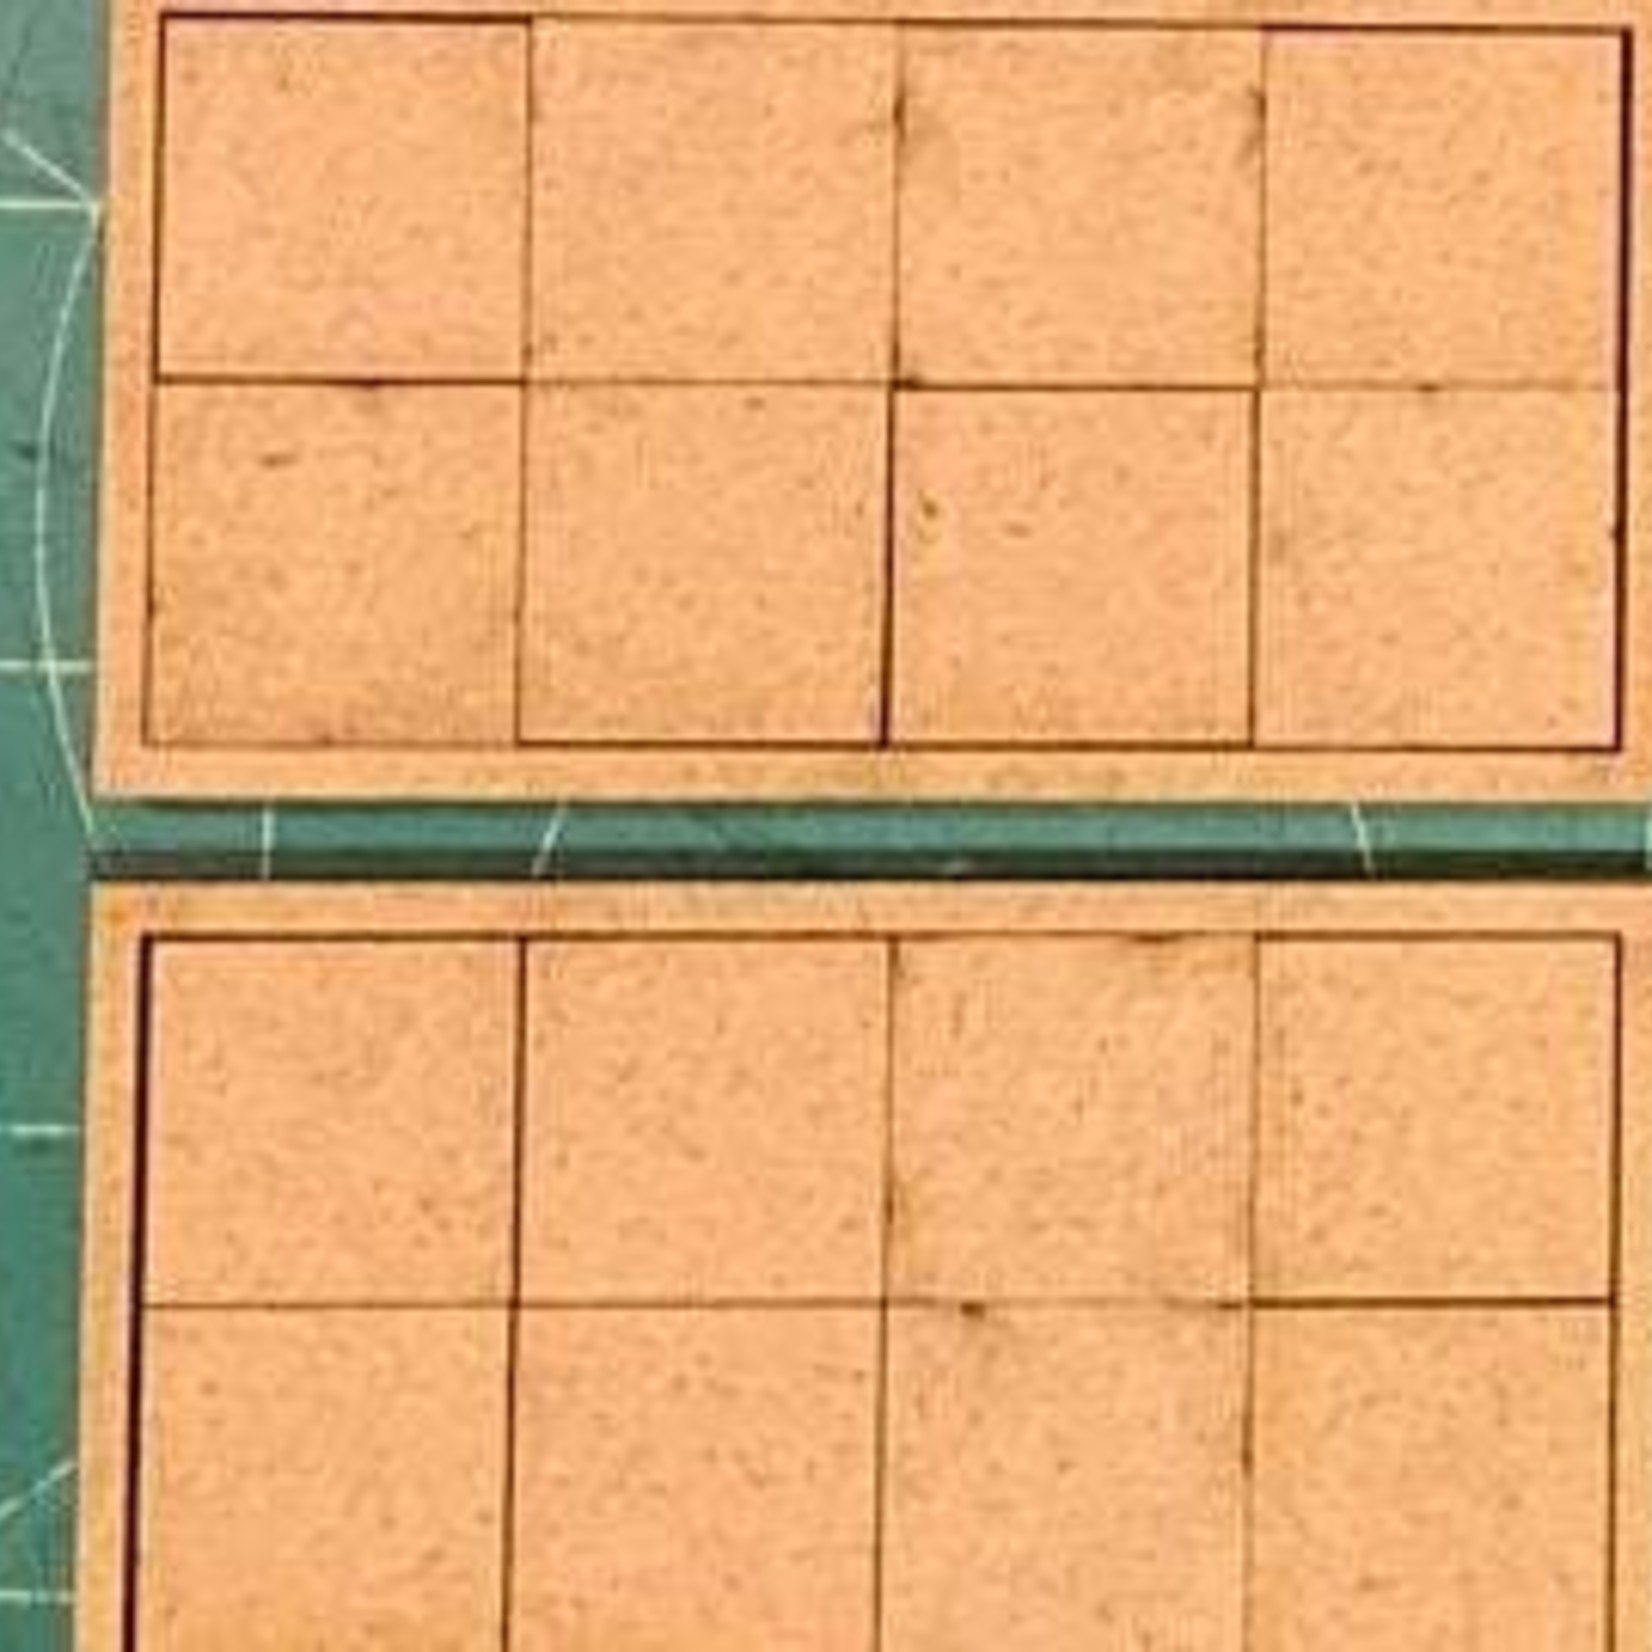 Phalanx Games & Sundry Pair of 20mm "Sharp Practice" Rank & File Tray 8 Figure - Squares